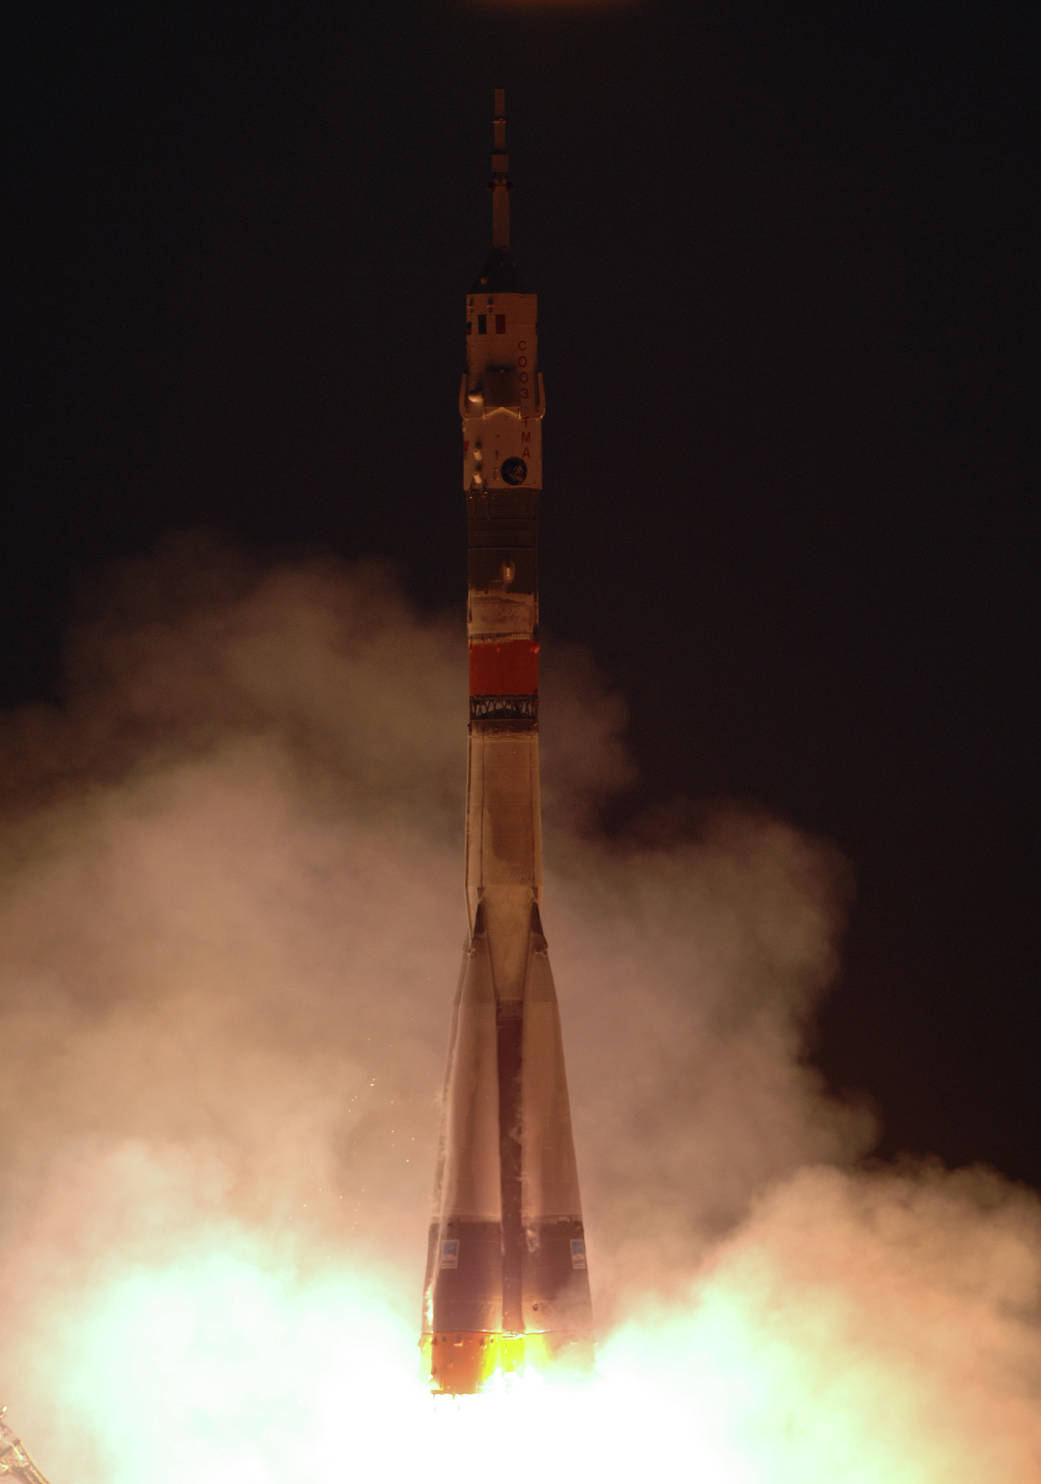 Soyuz rocket launch at night